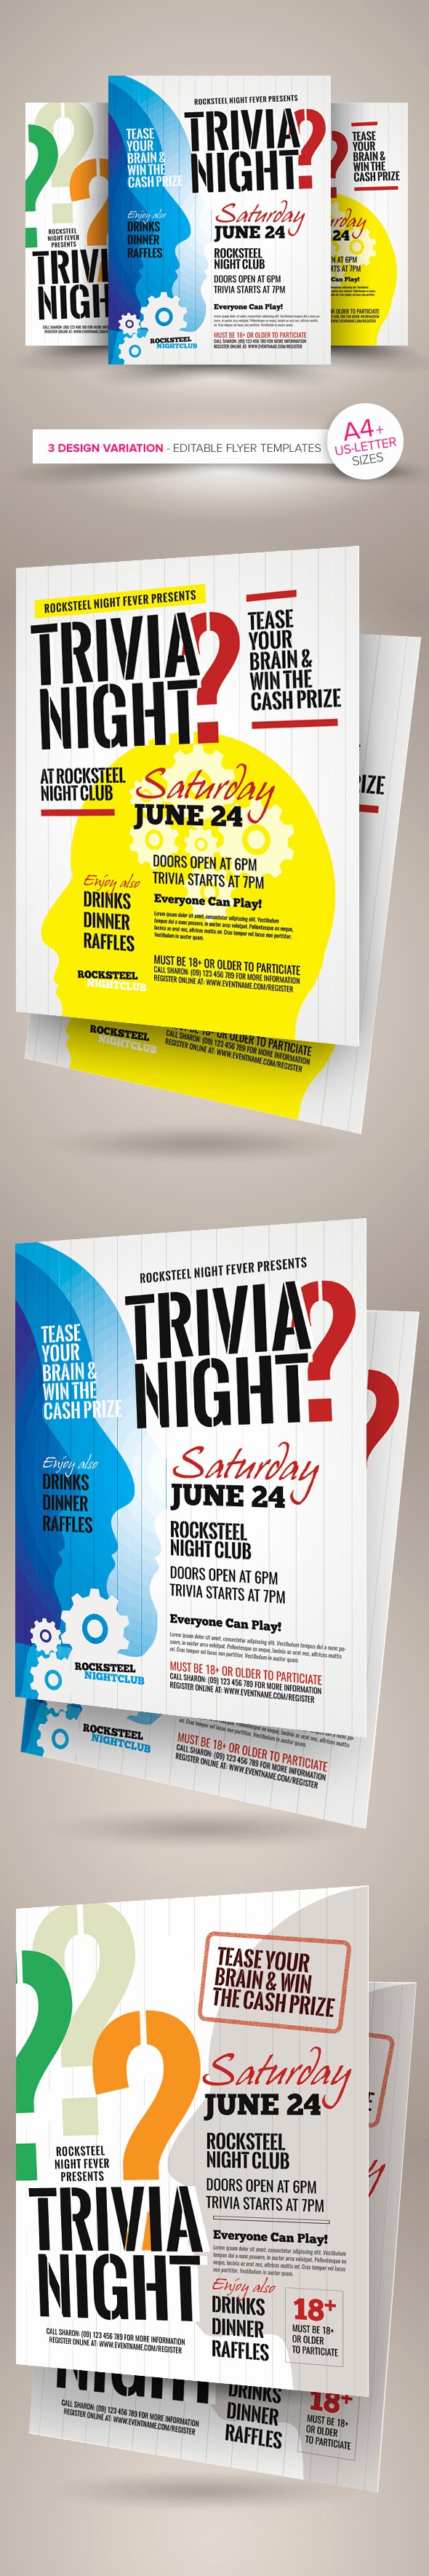 Trivia Night Flyer Template Free Fresh Trivia Night Flyer Templates On Behance